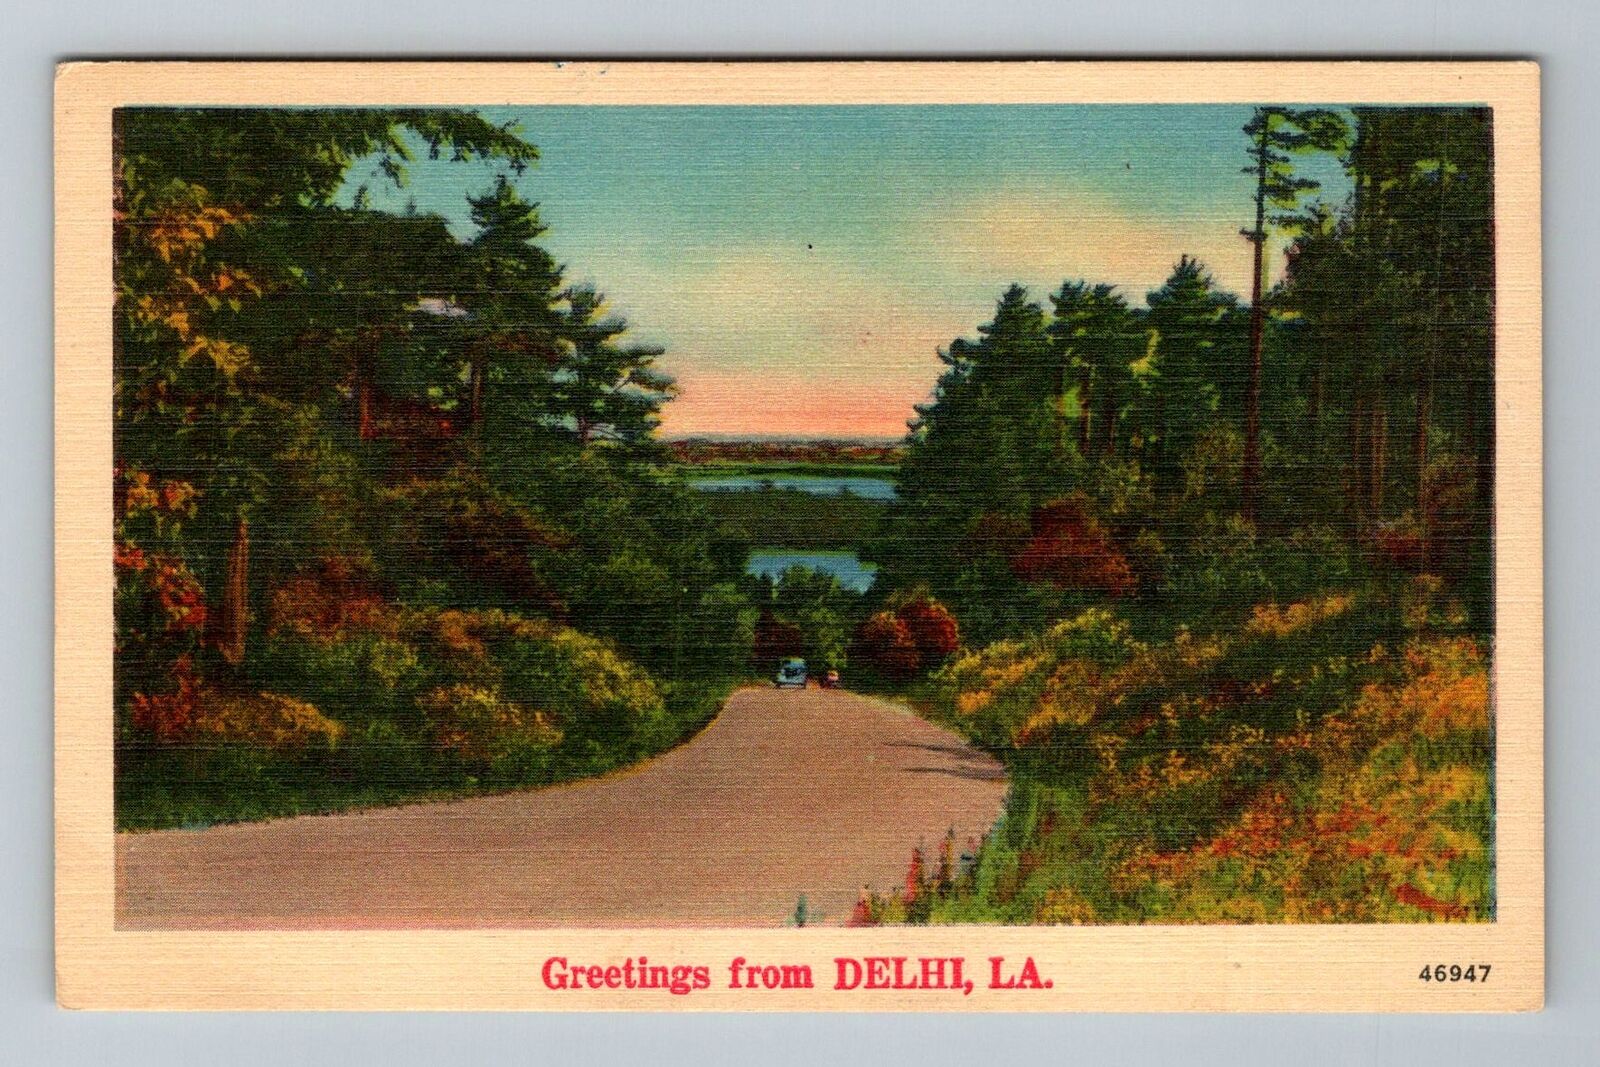 Delhi LA-Louisiana Greetings Scenic Roadway Period Car Vintage Souvenir Postcard